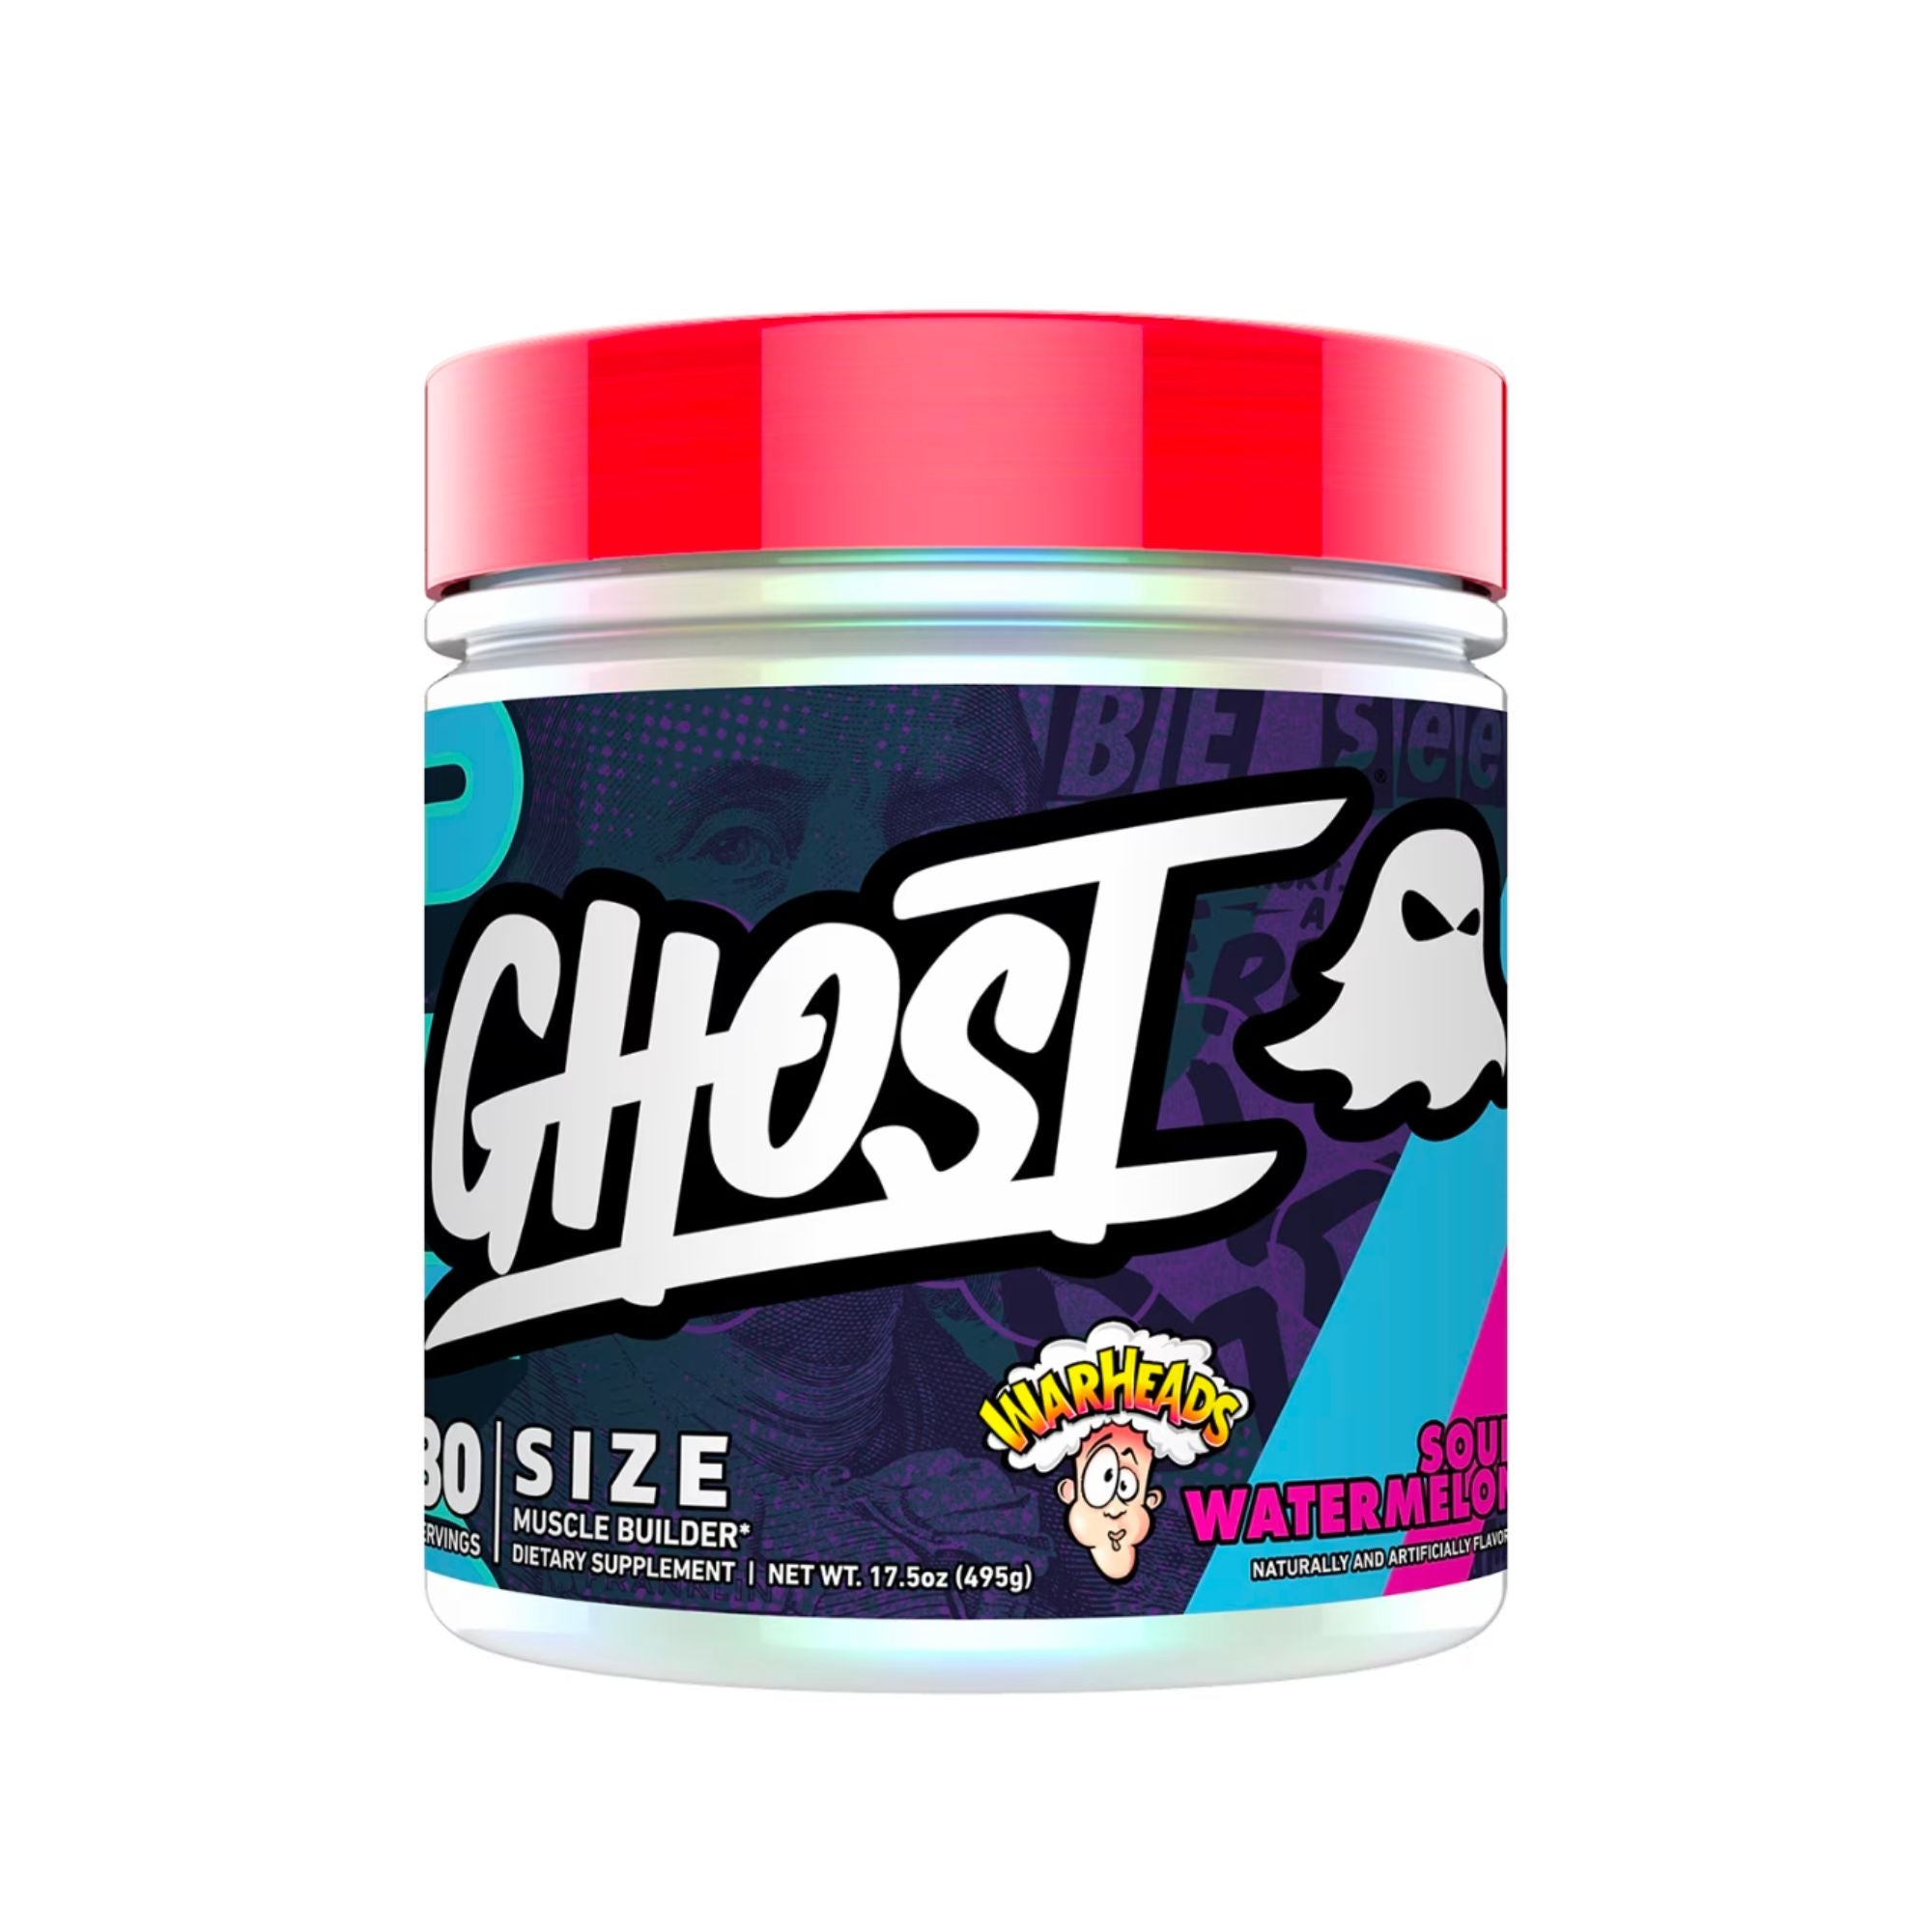 Ghost Size Pre Workout Non-Stim